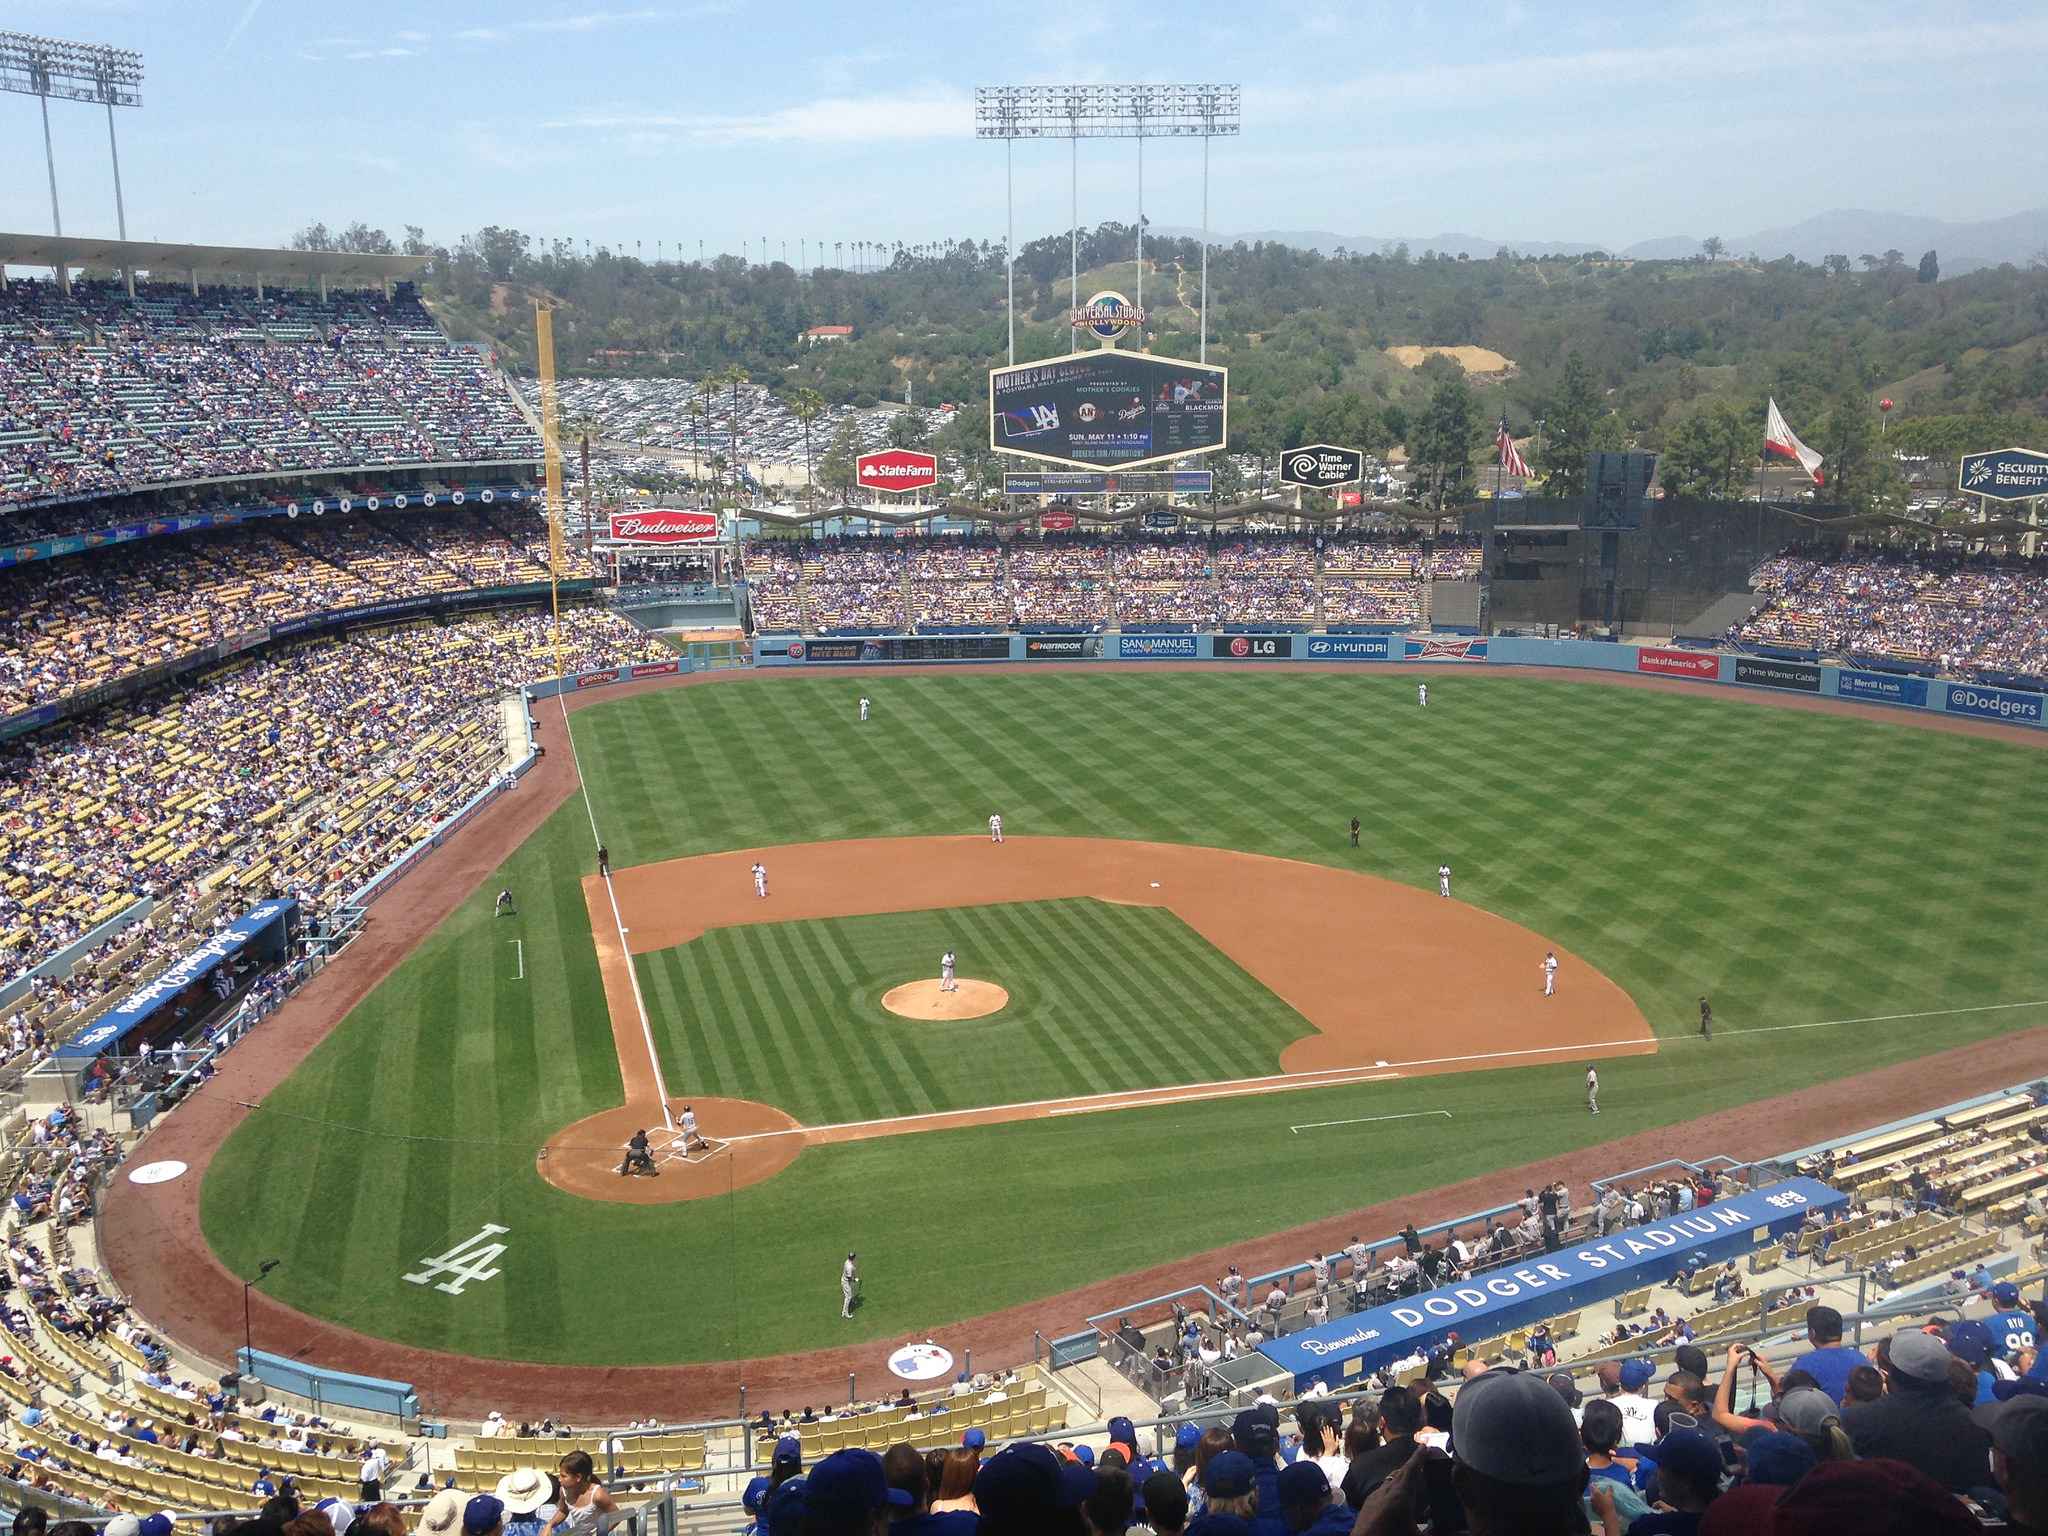 Stadium, Los Angeles Dodgers ballpark - of Baseball